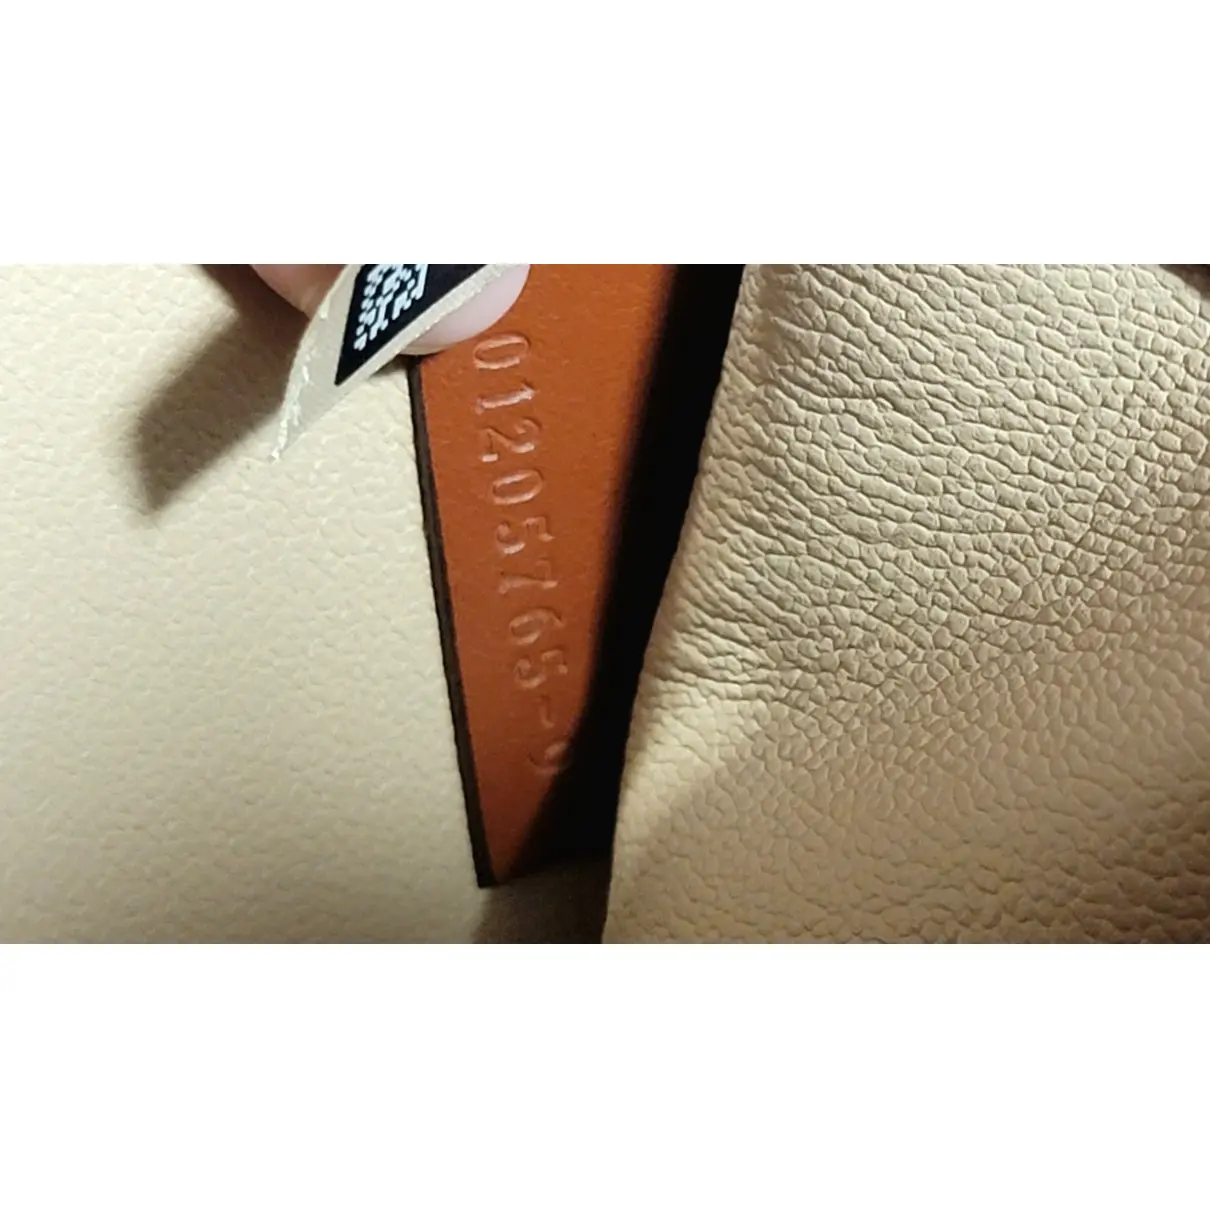 Buy Chloé Aby leather handbag online